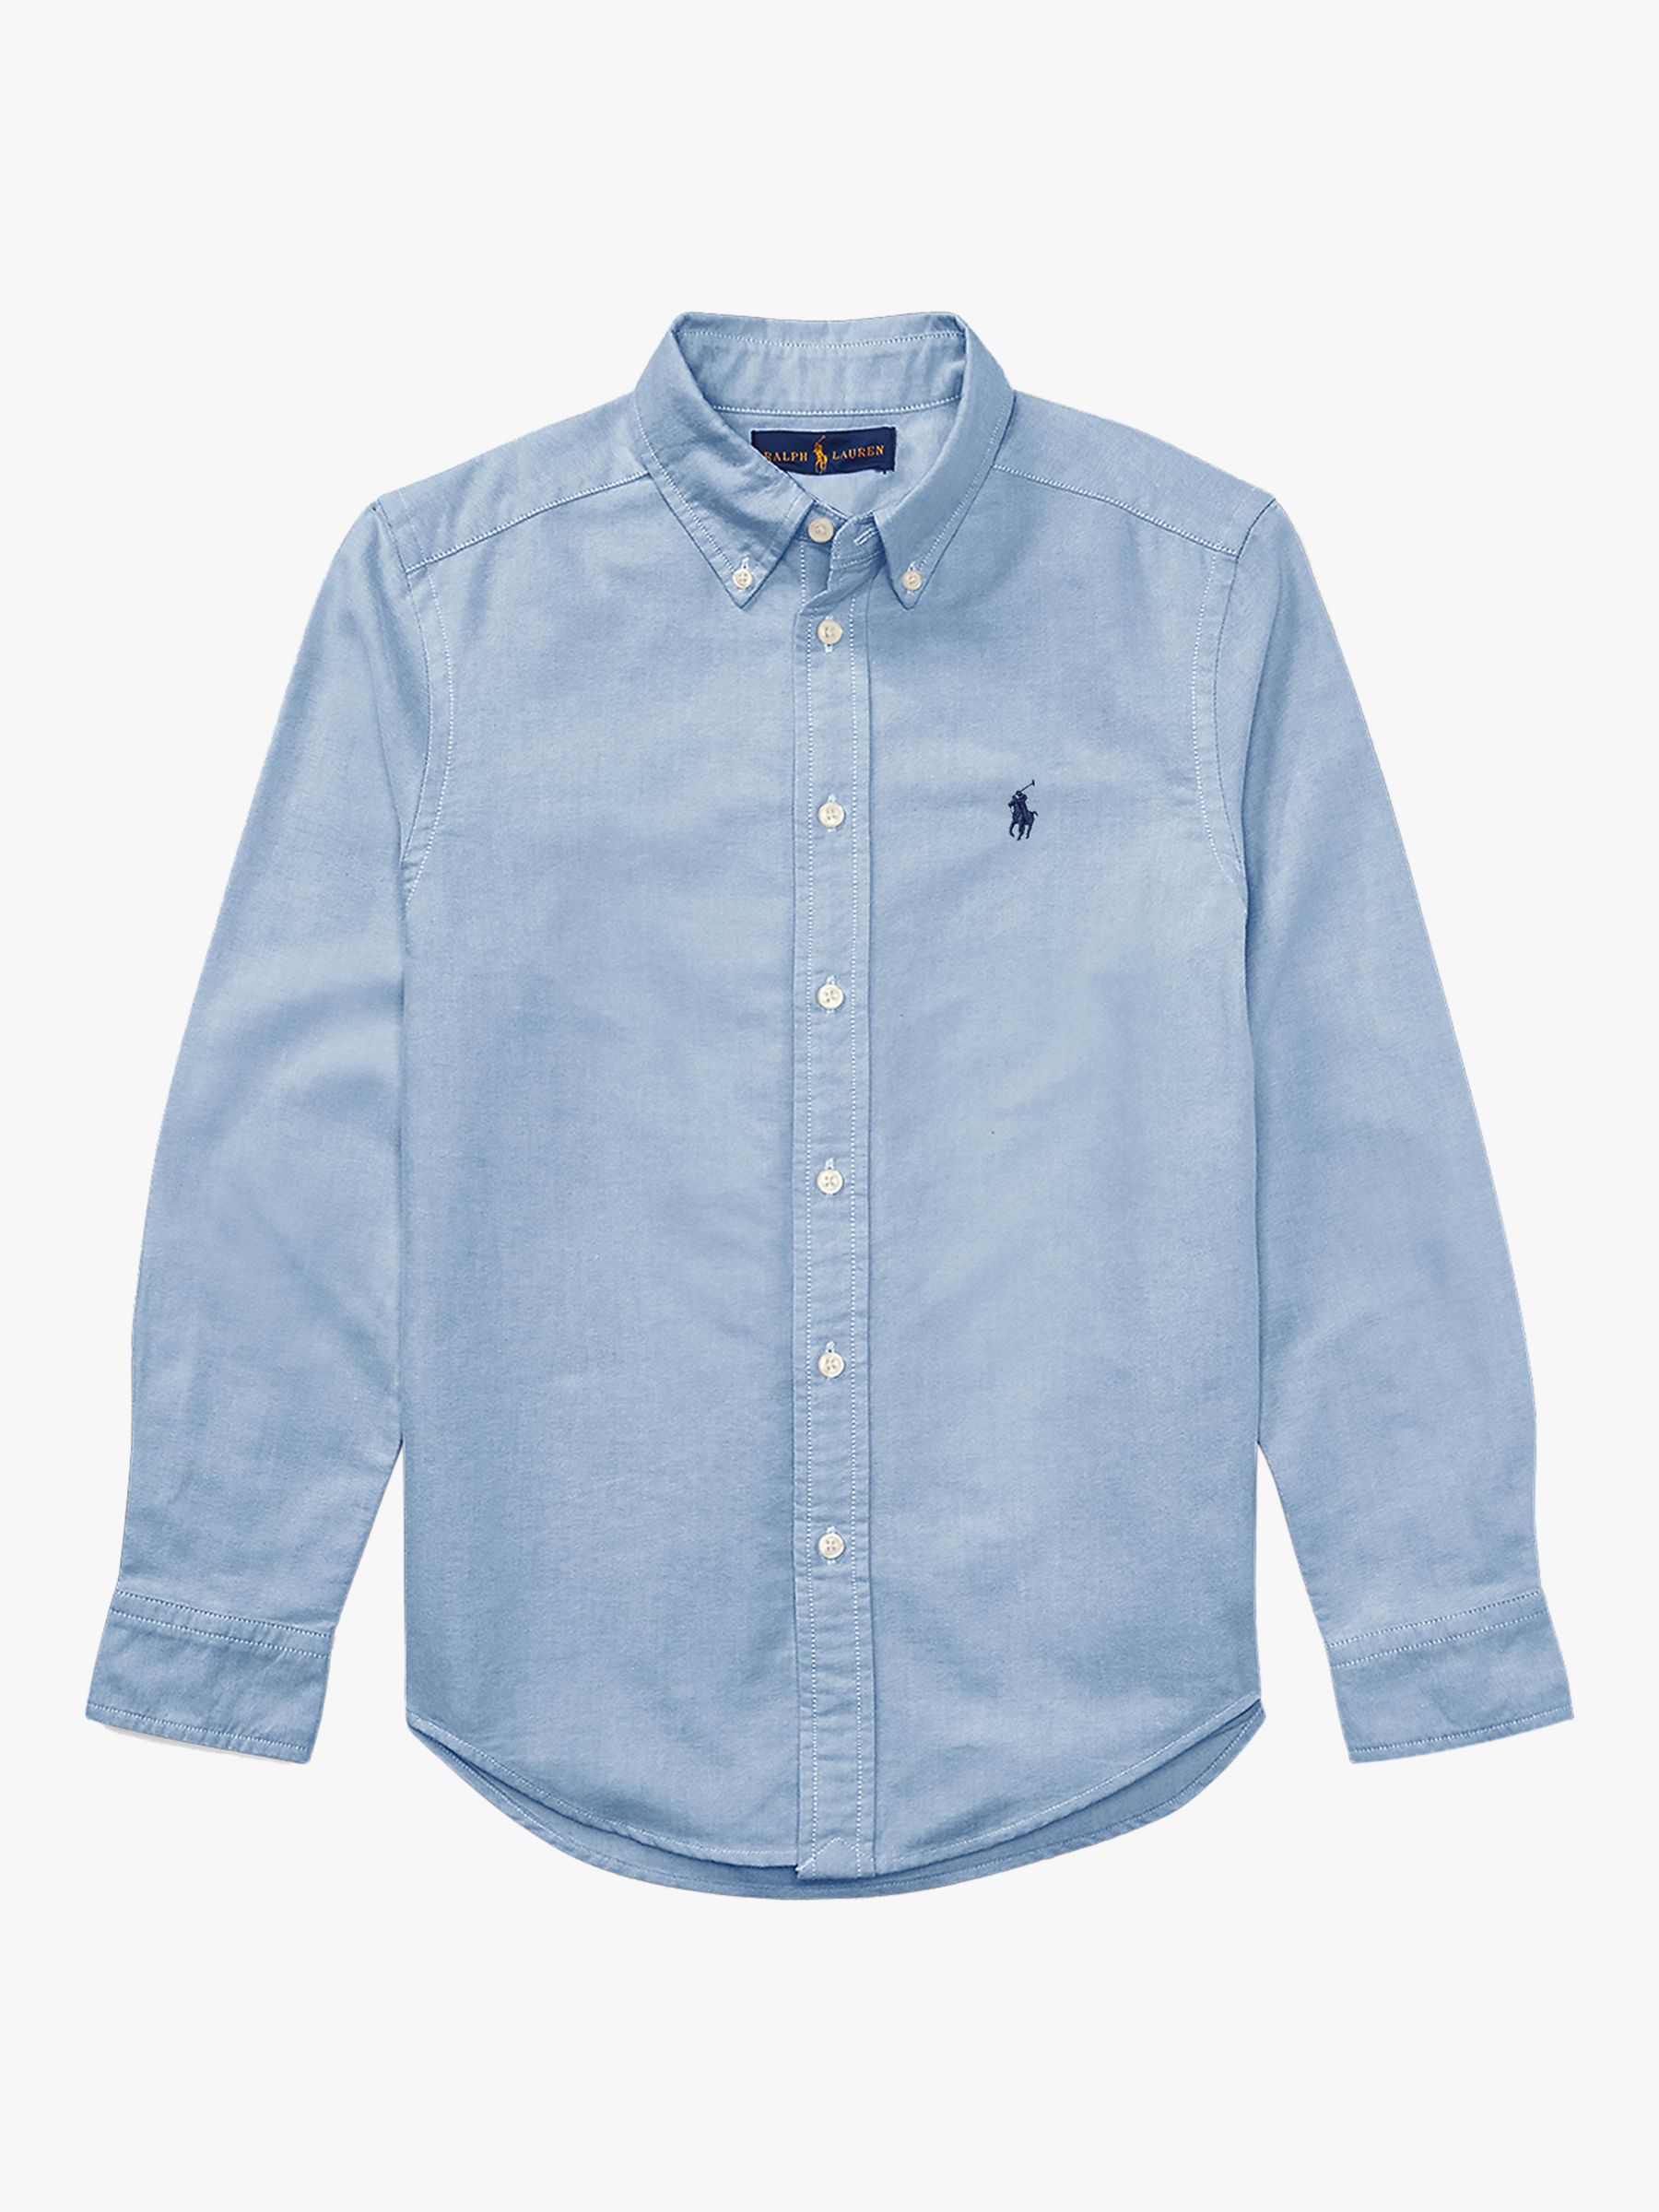 Polo Ralph Lauren Kids' Oxford Shirt, Blue at John Lewis & Partners